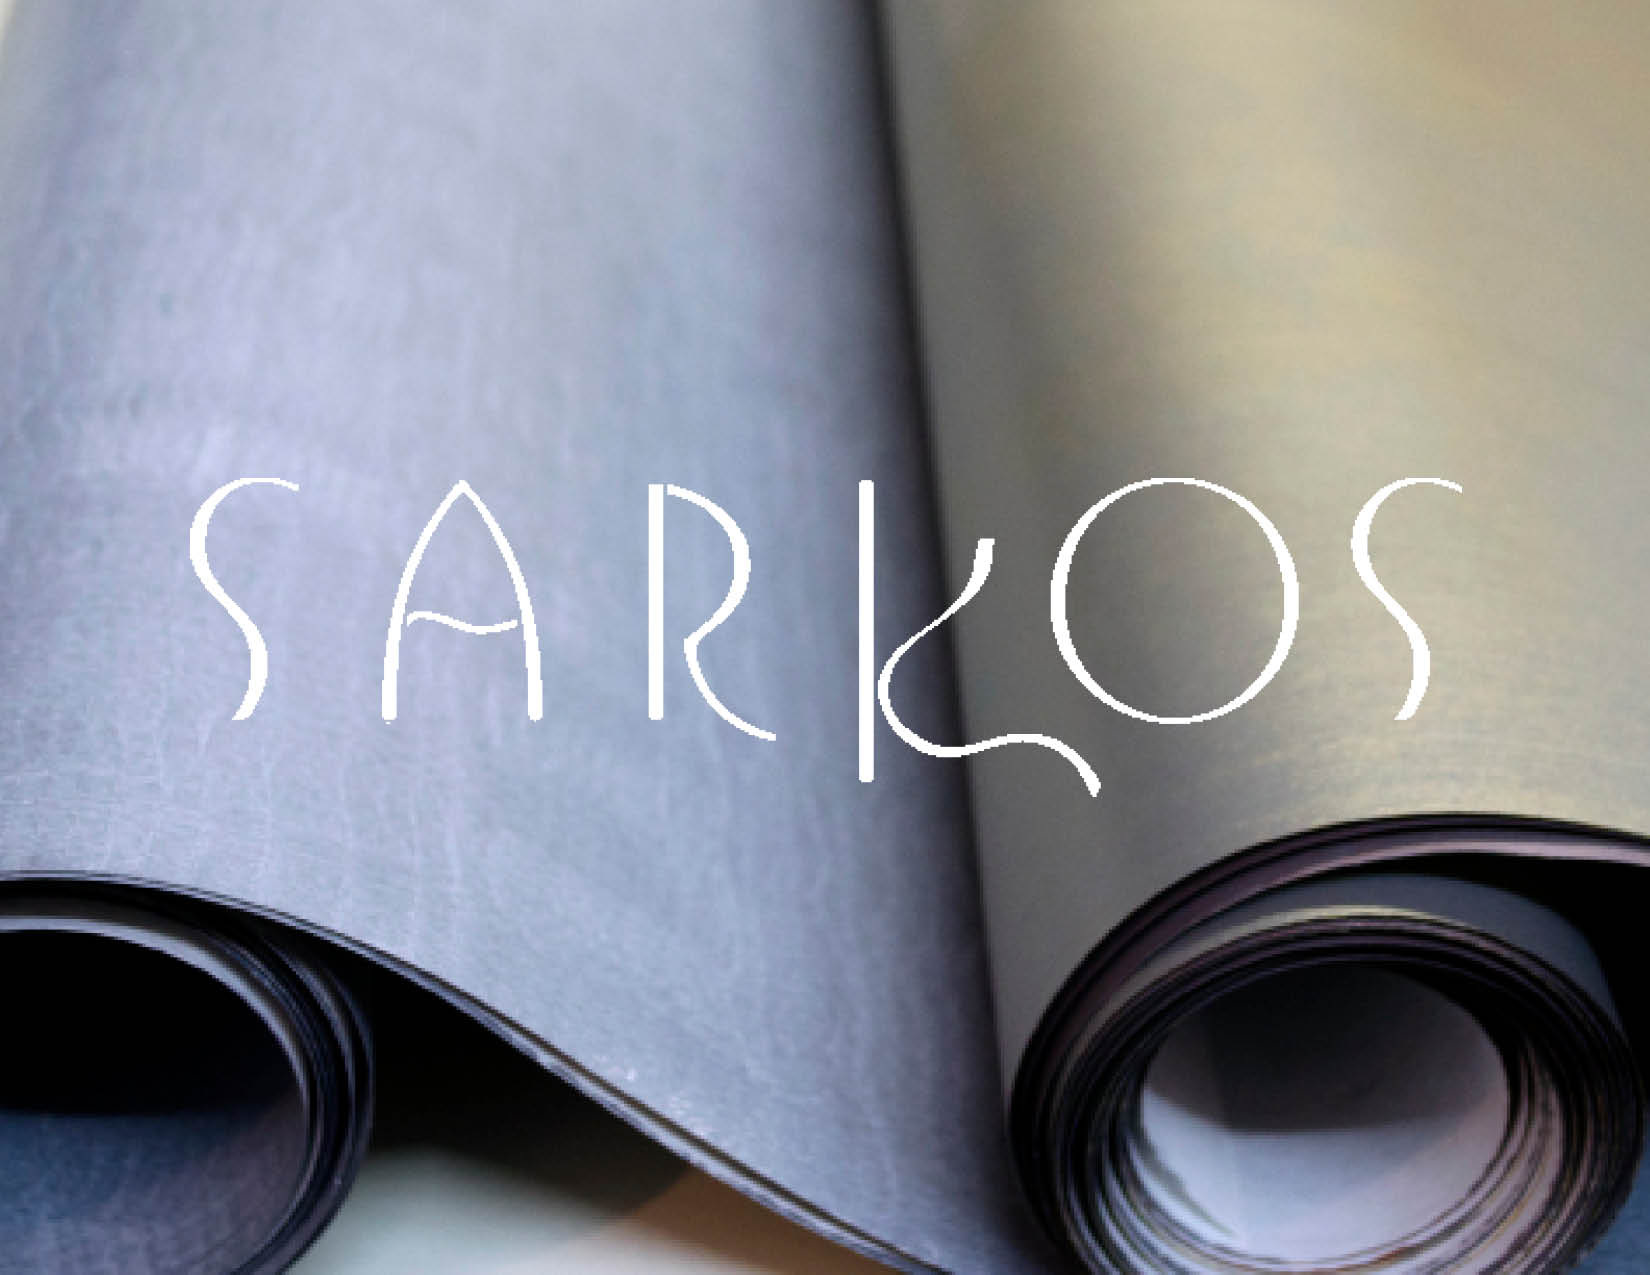 Sarkos_brandbook.jpg